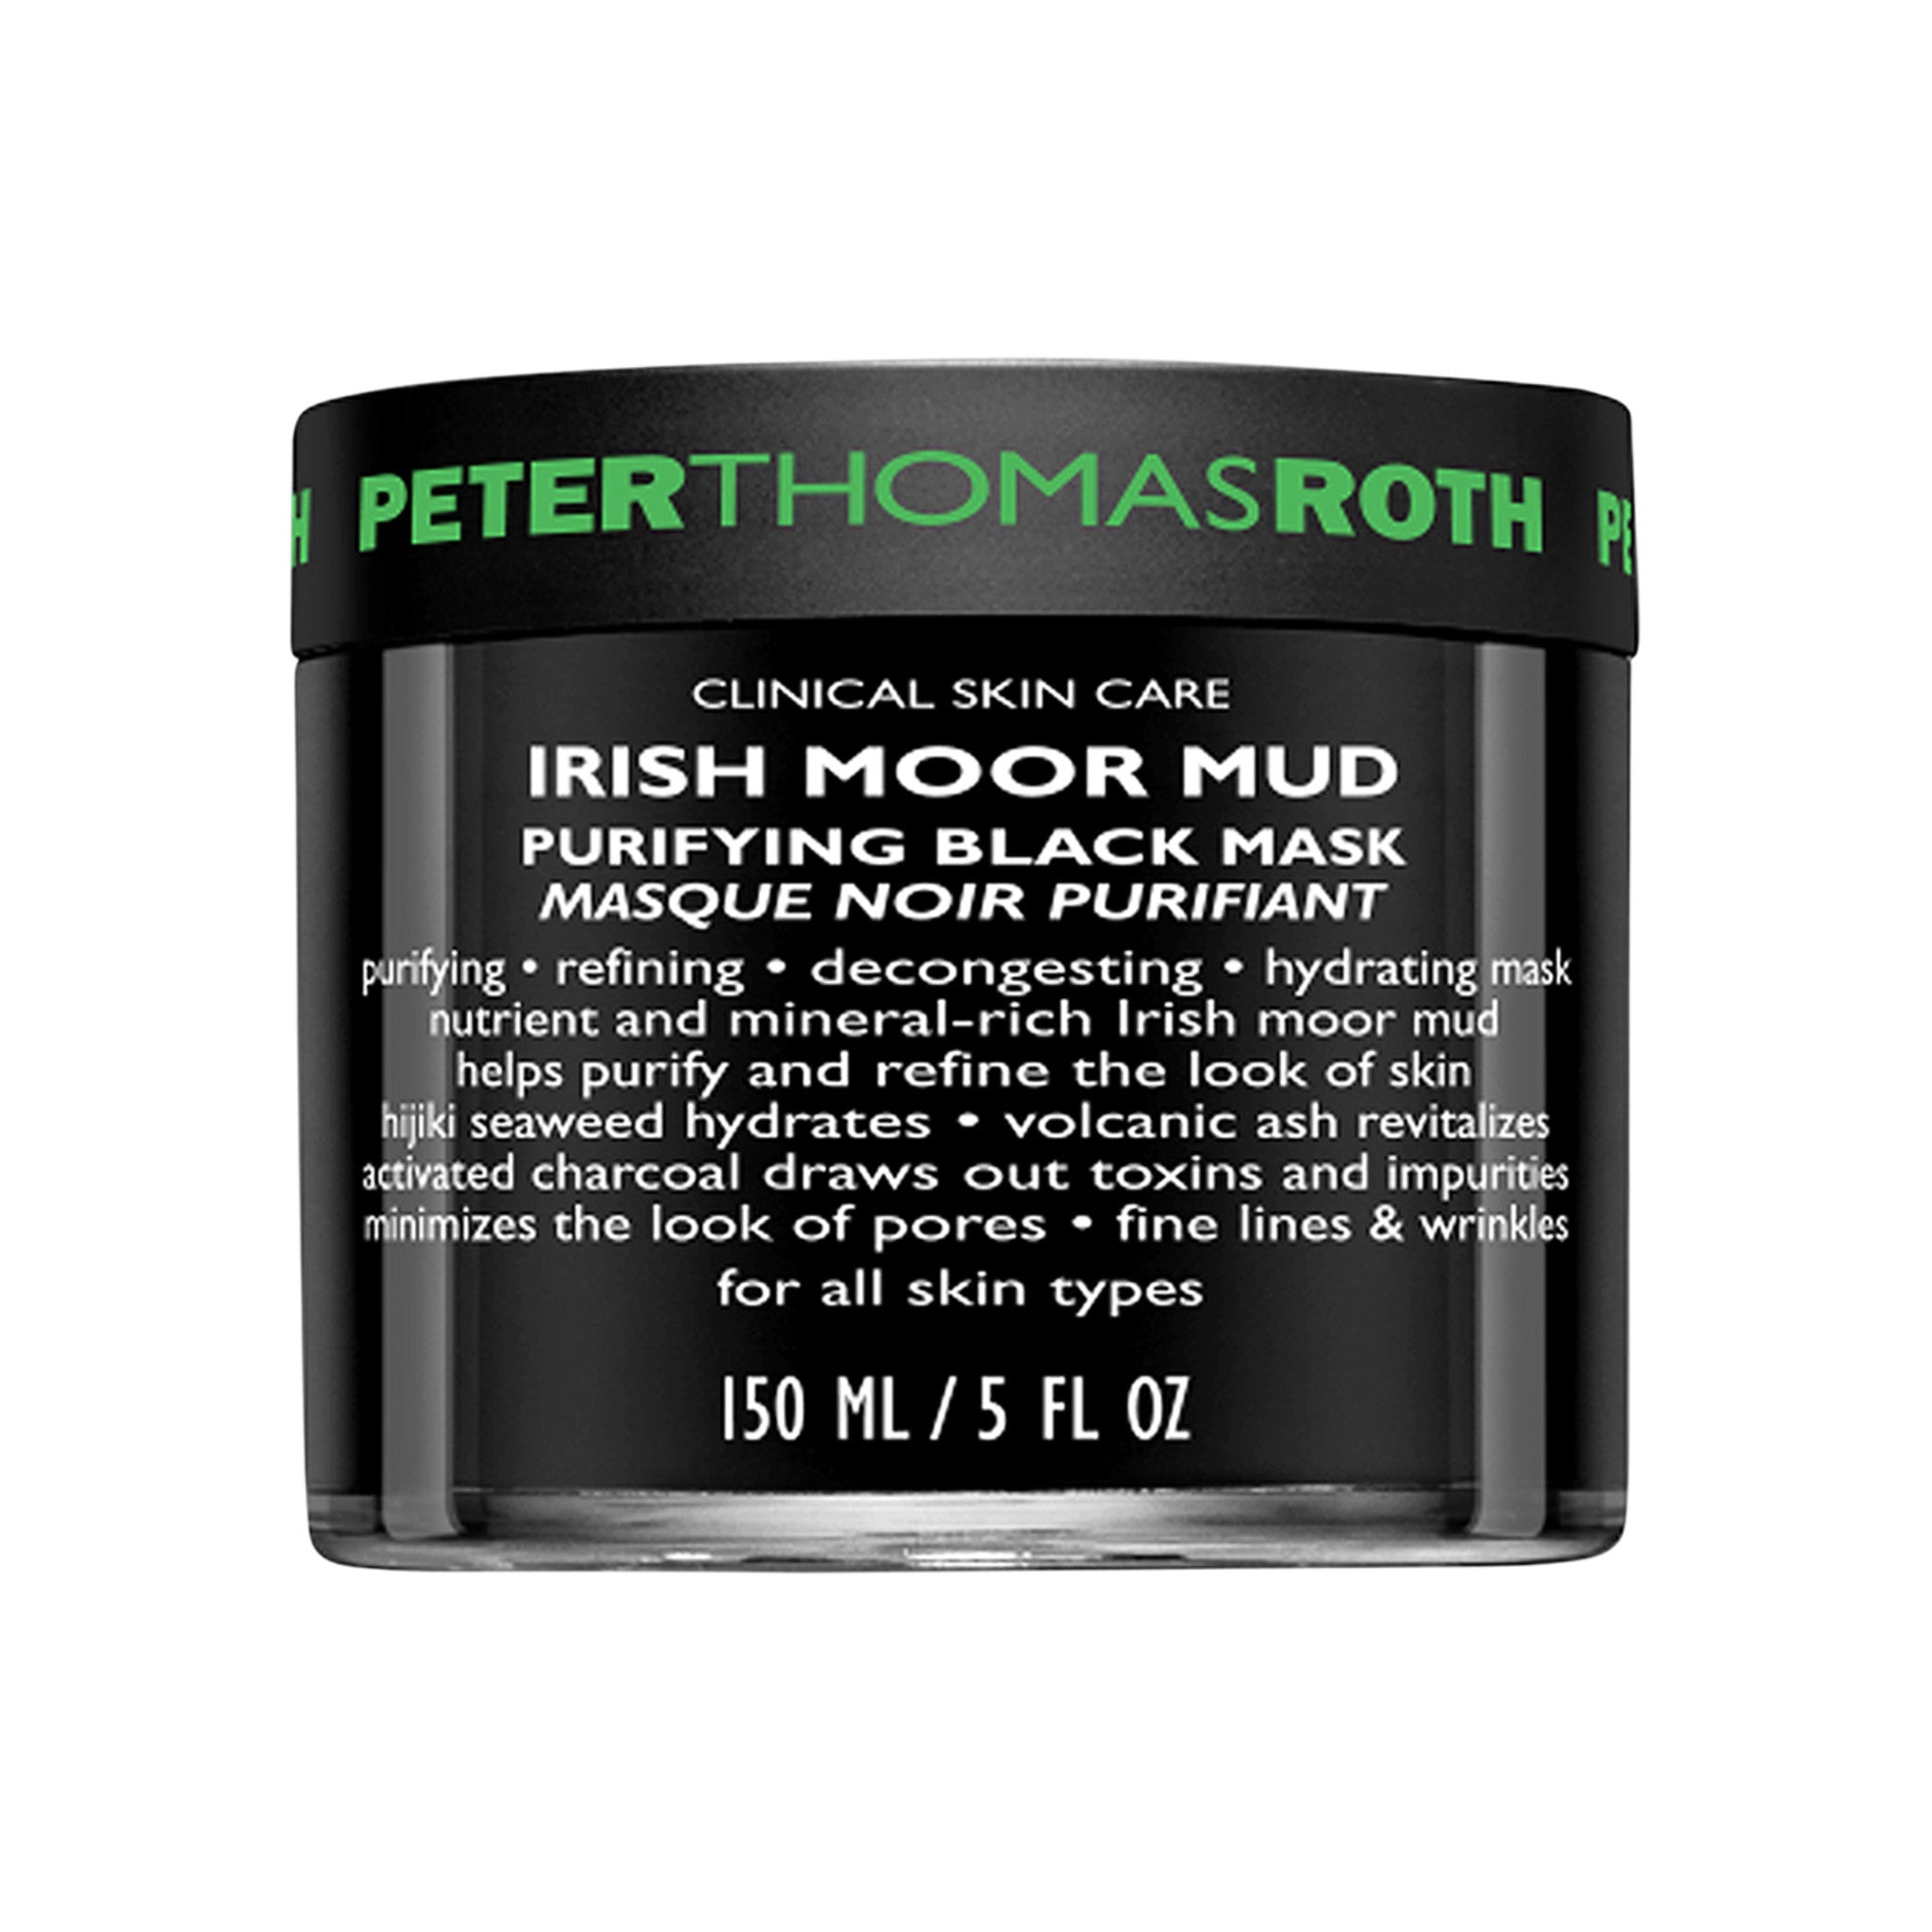 Peter Thomas Roth Irish Moor Mud Purifying Black Mask main image.